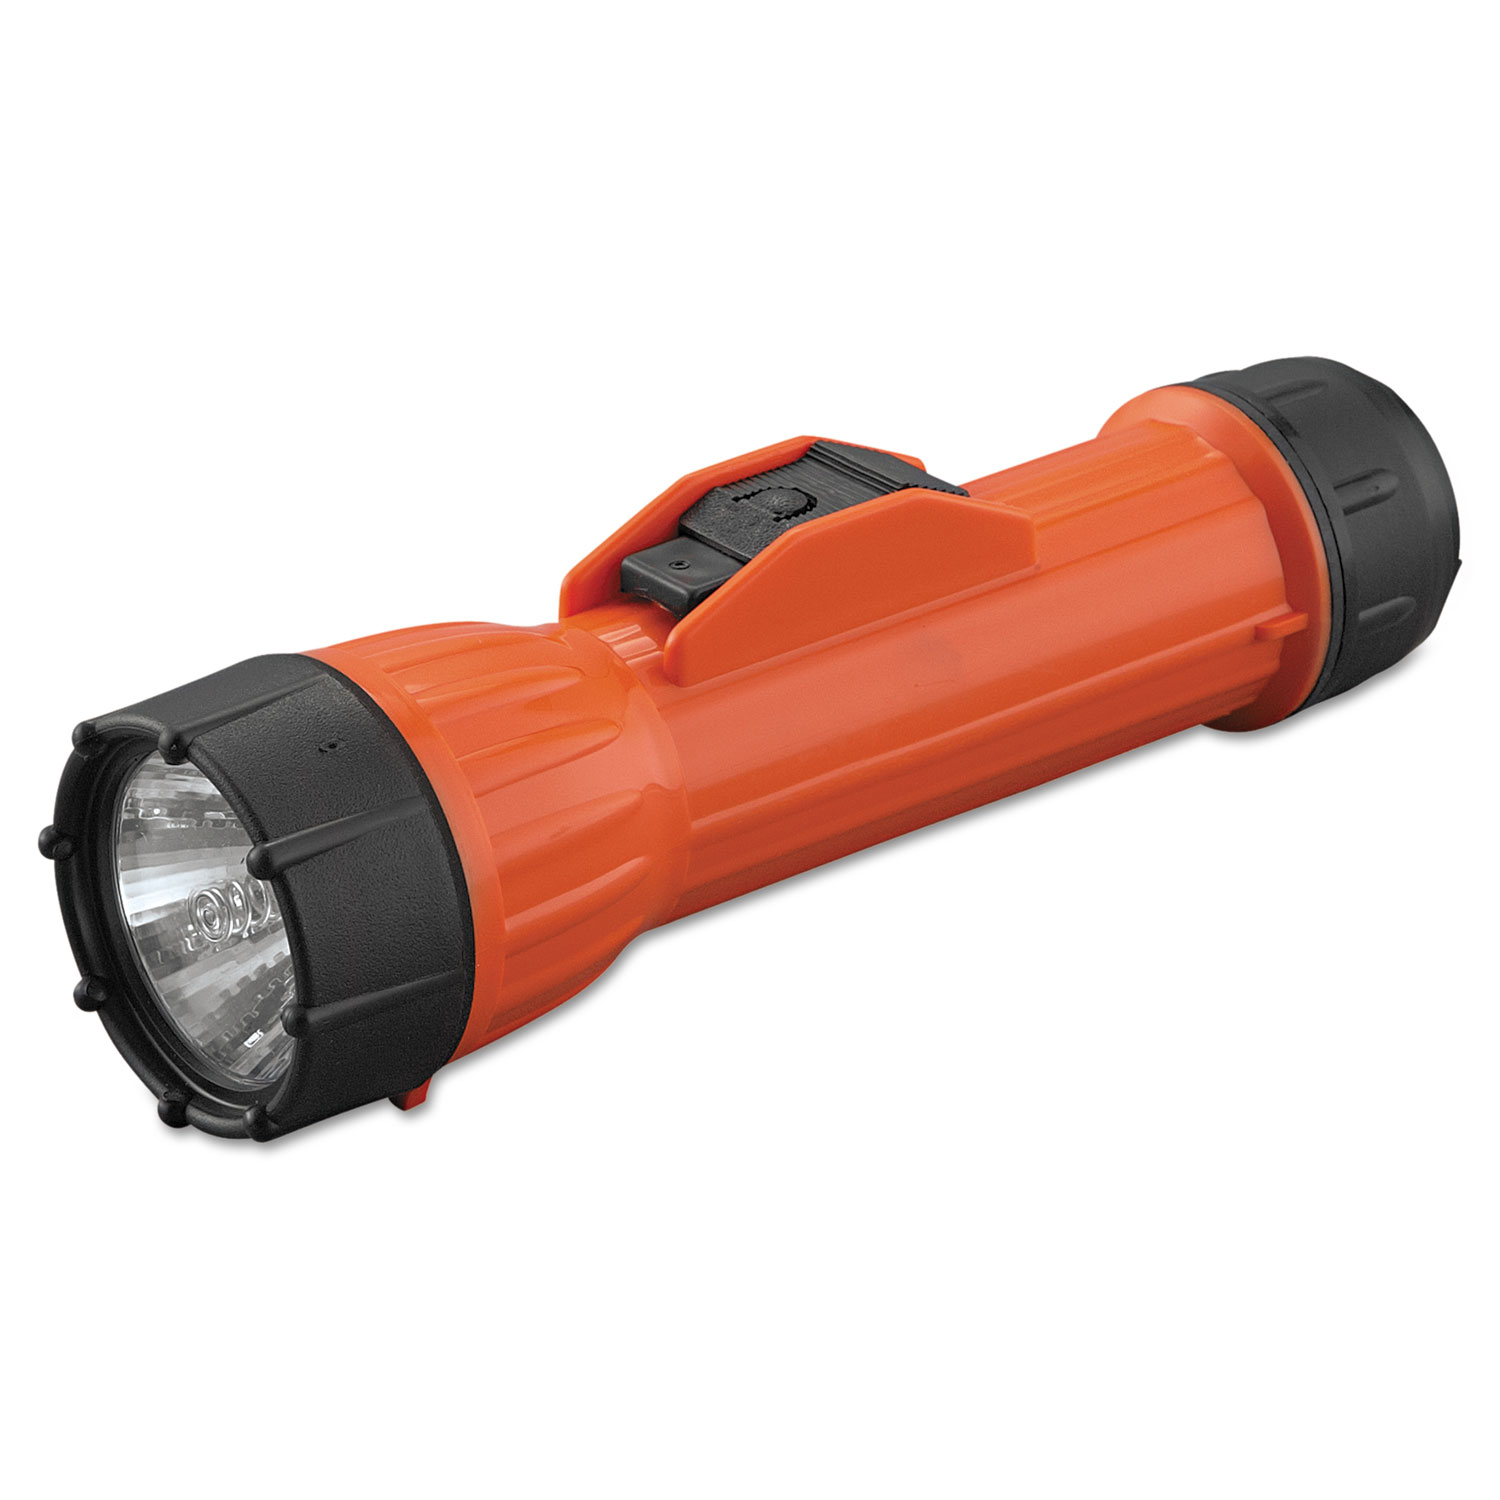  Bright Star 14460 WorkSAFE Waterproof Flashlight, 2 D Batteries, Orange/Black (BGT14460) 